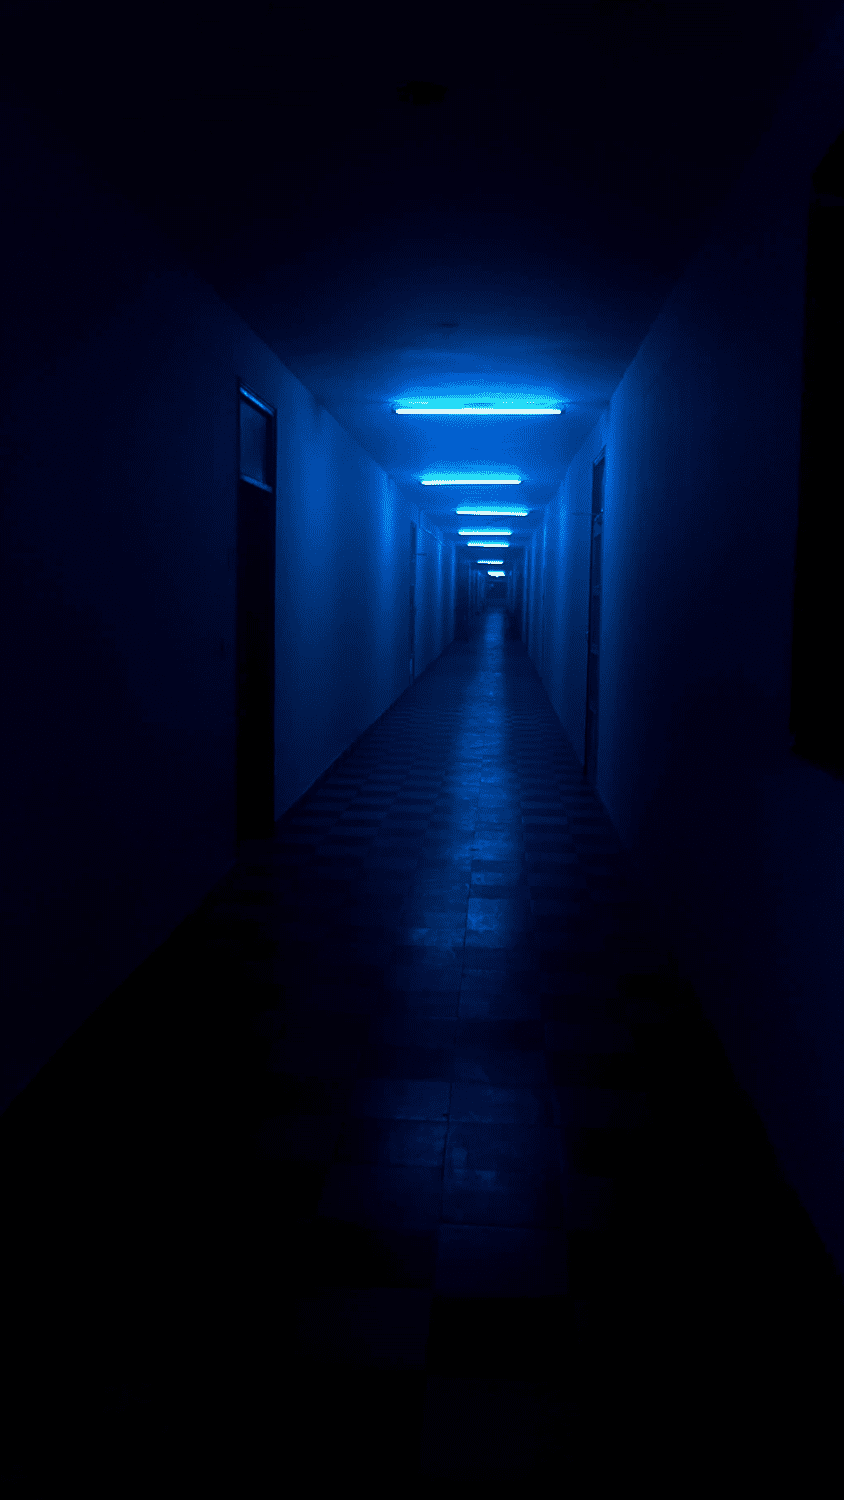 A dark, empty hallway with blue lights at the end. - Dark blue